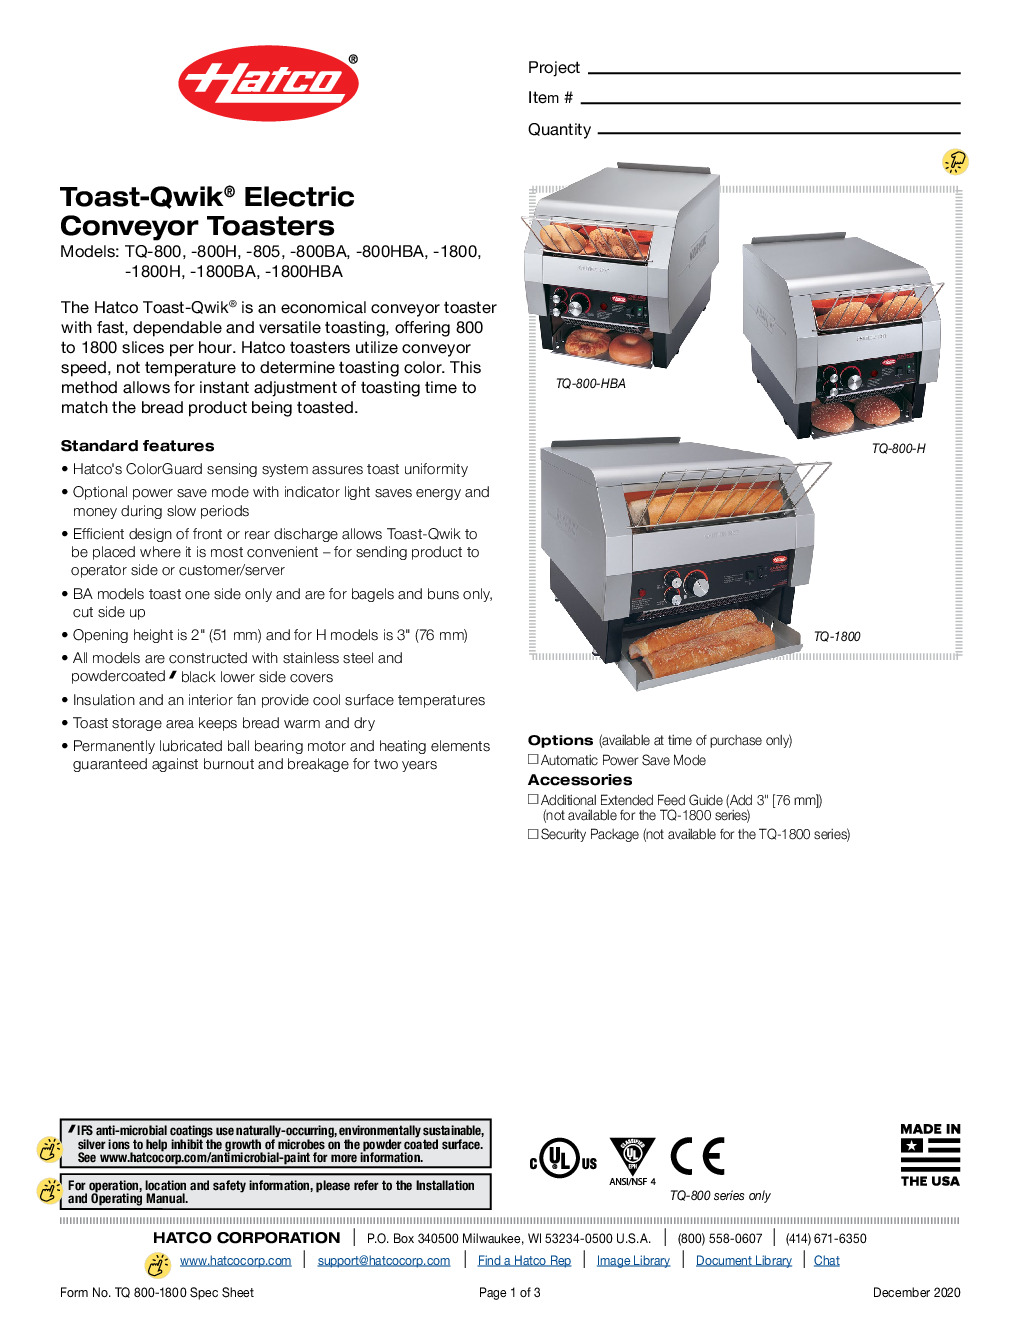 Hatco TQ-1800H/BA Conveyor Type Toaster